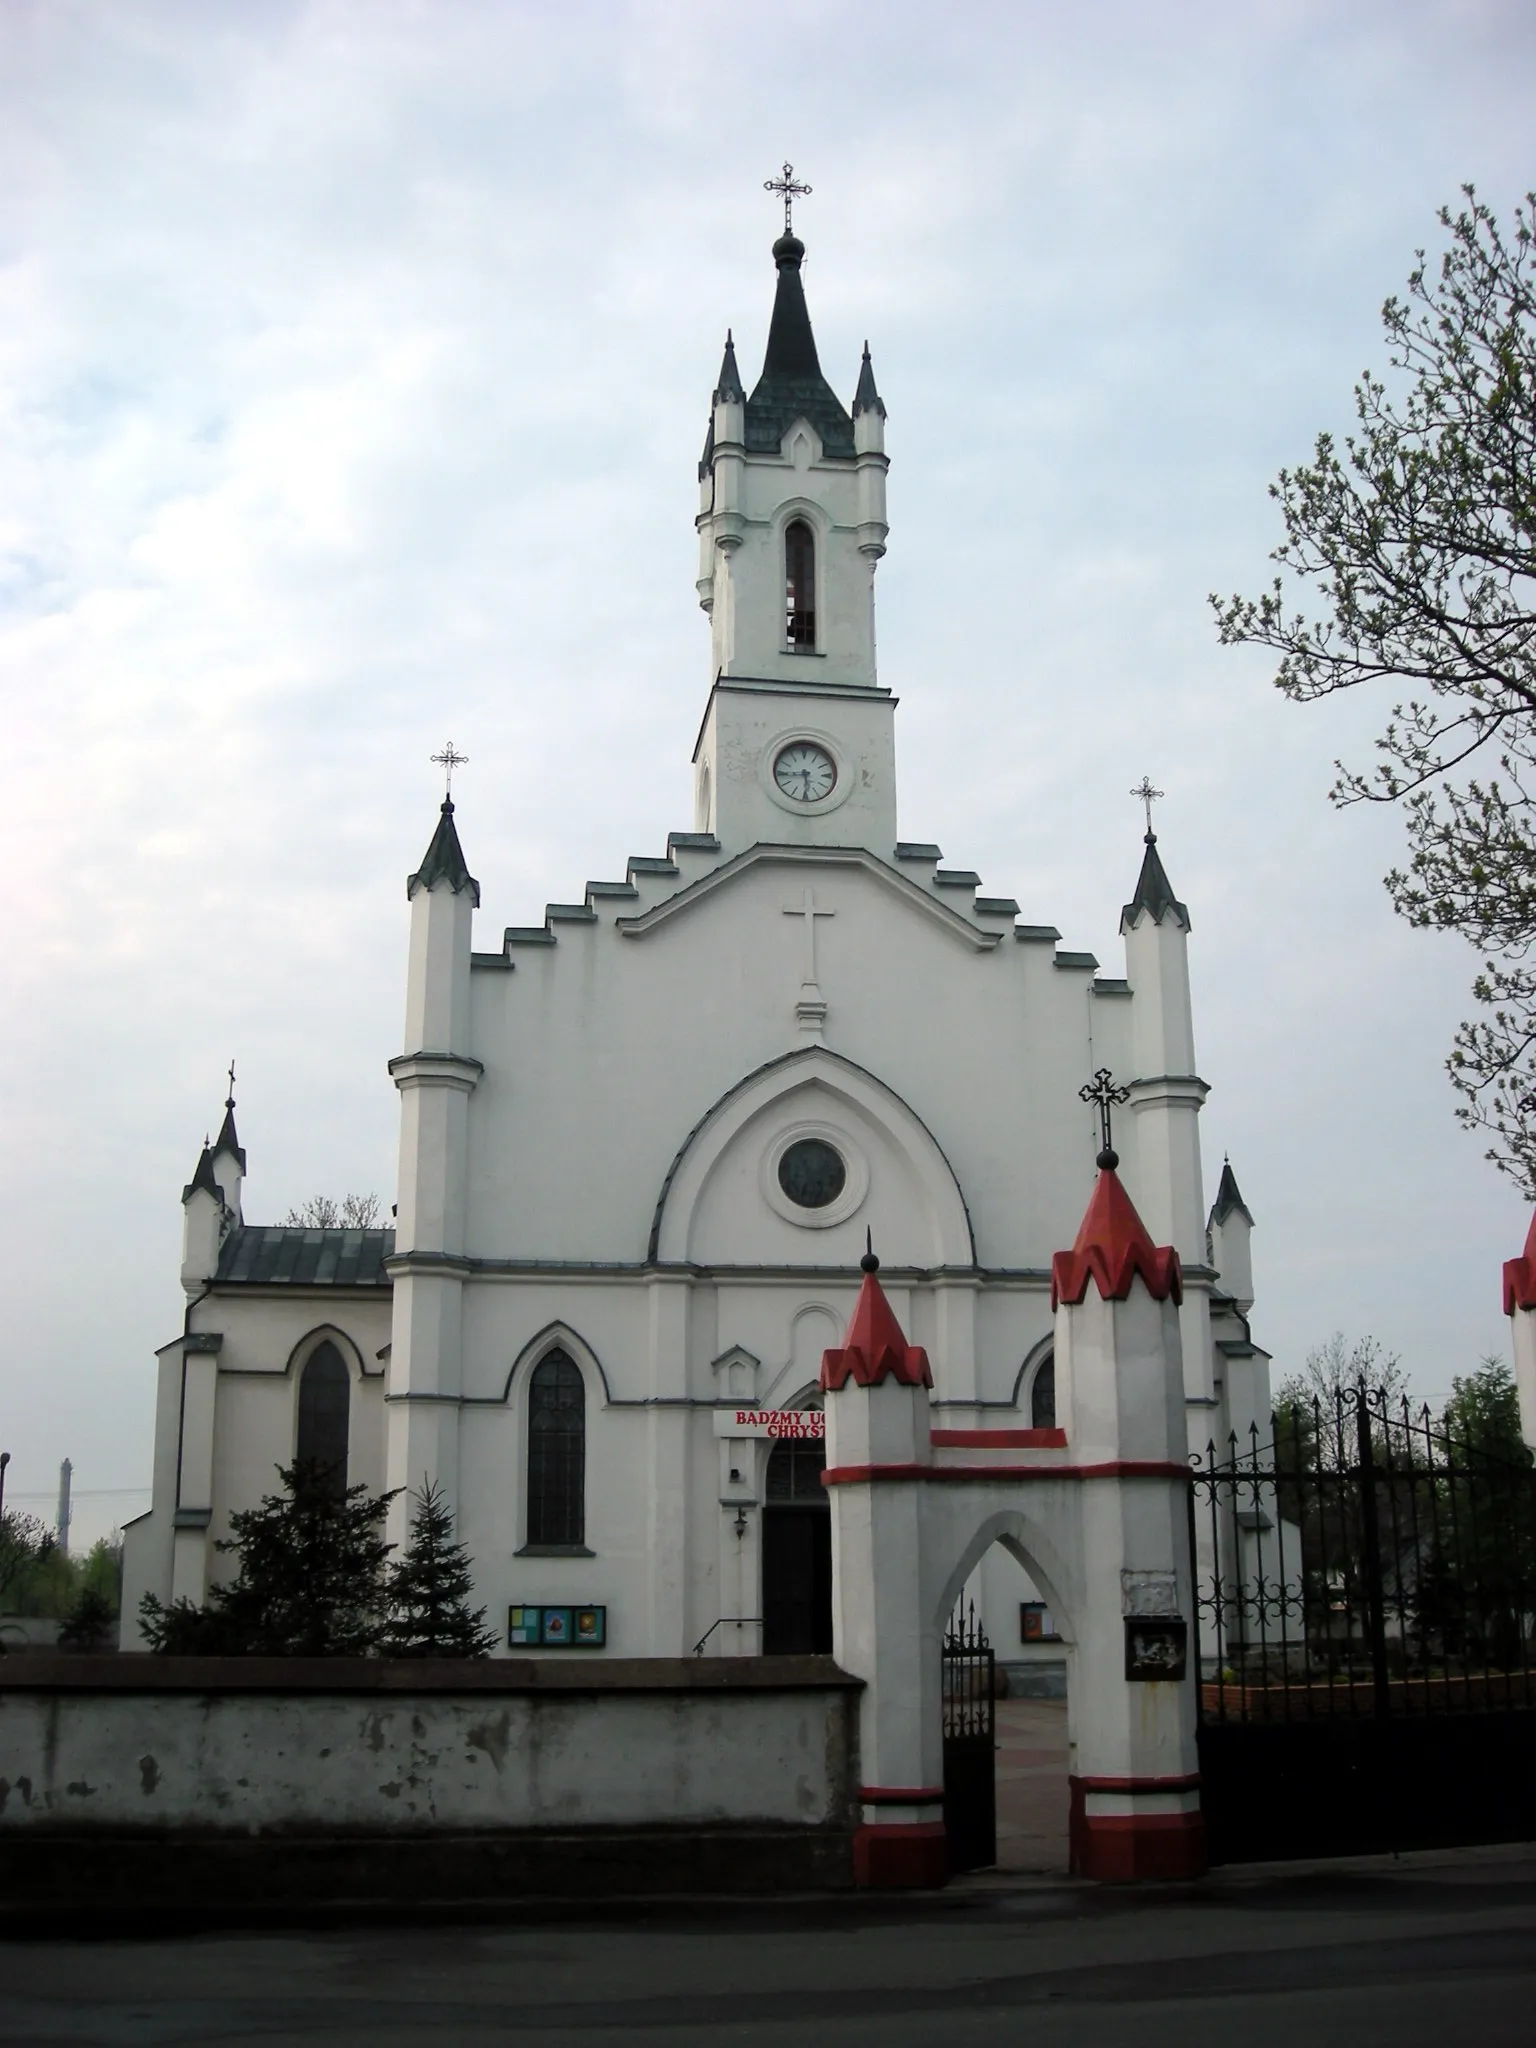 Photo showing: The church in Krośniewice, Poland.